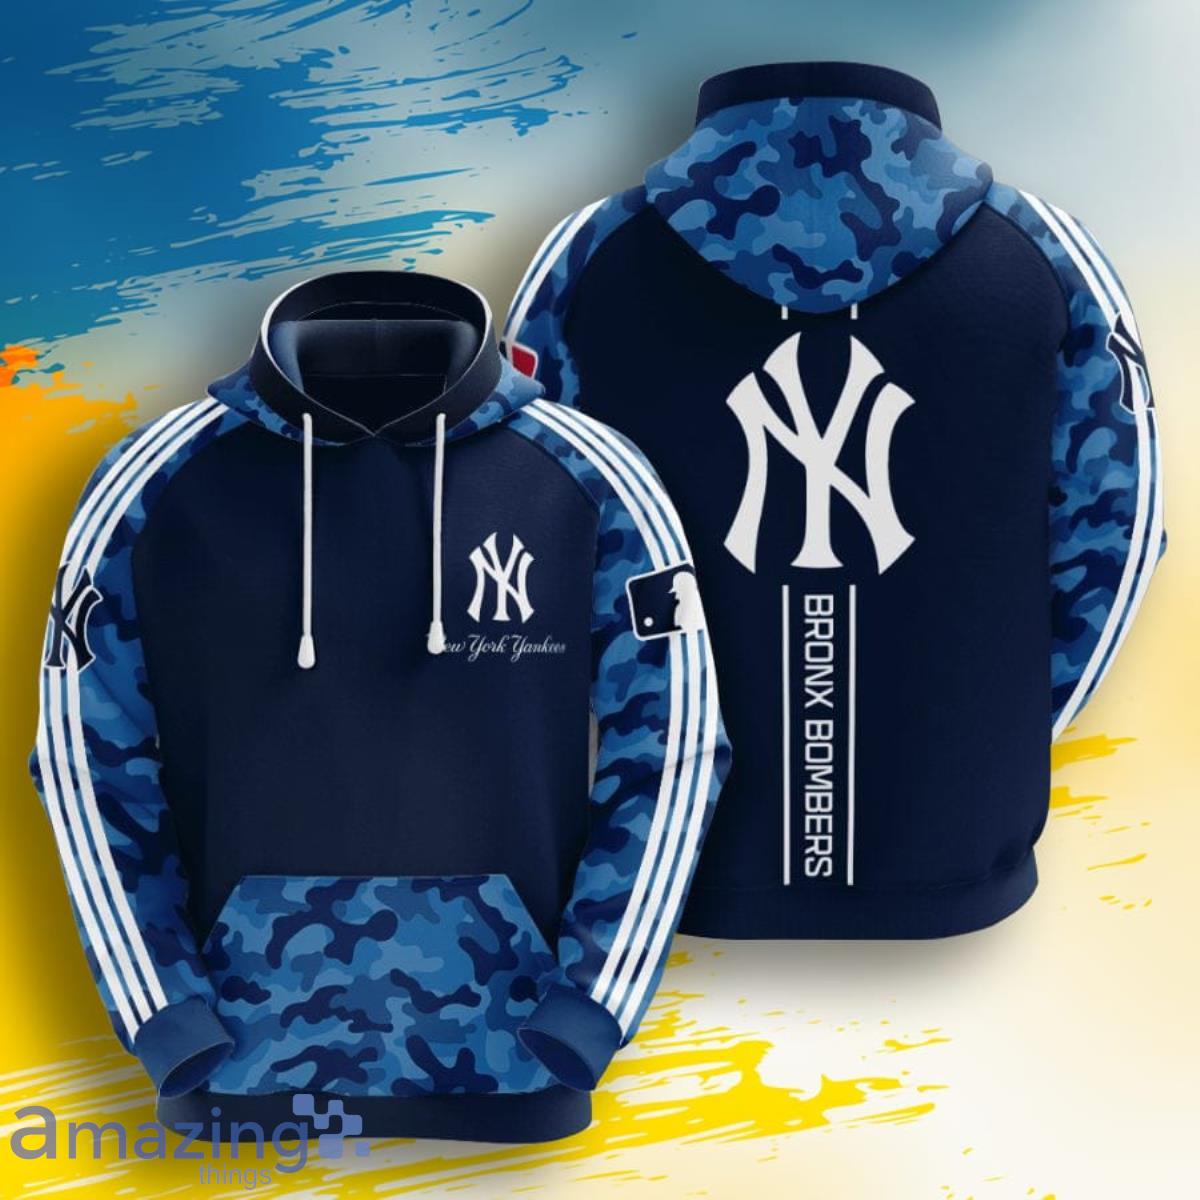 MLB Genuine Merchandise New York Yankees Bronx Bombers Long Sleeve Shirt  Size M